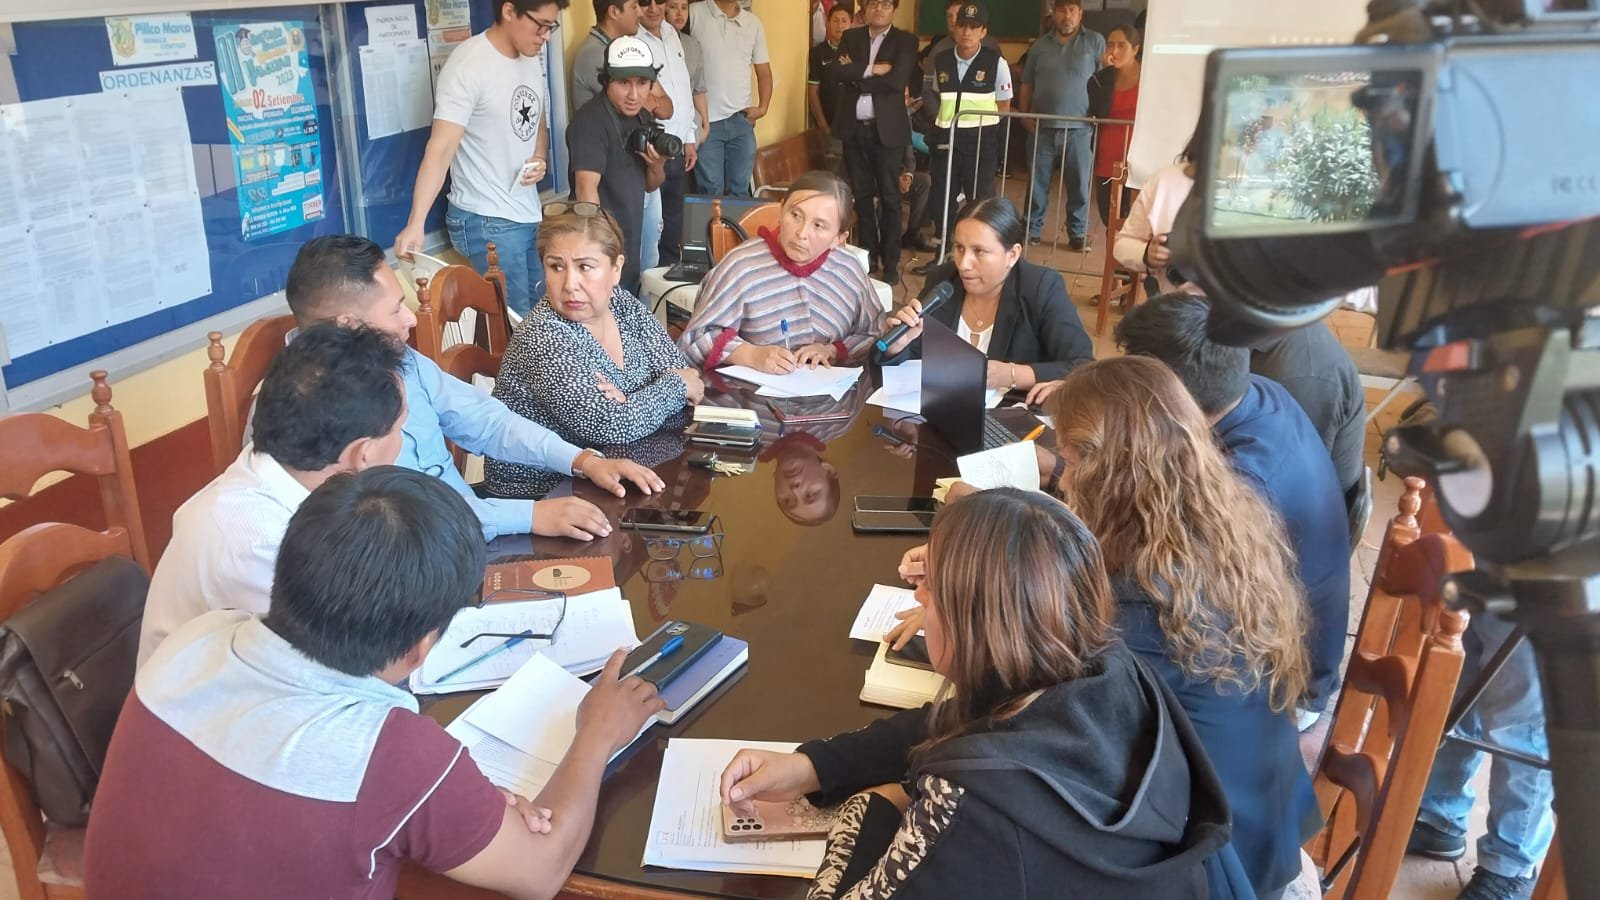 Postergan sesión de concejo para ver suspensión de alcaldesa de Pillco Marca